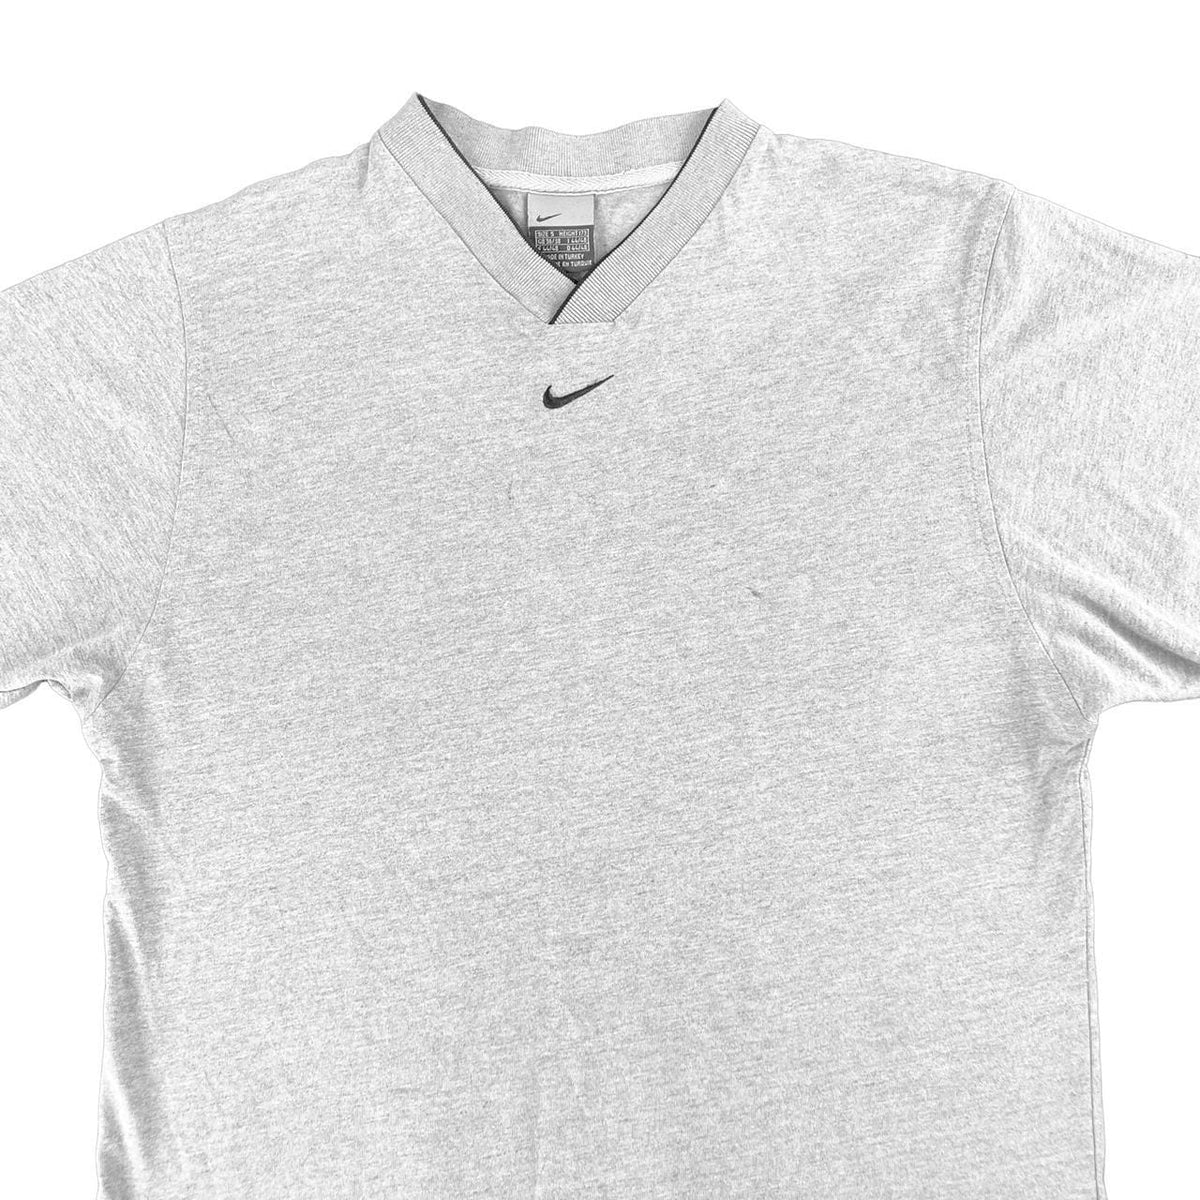 Nike Centre swoosh t shirt size S